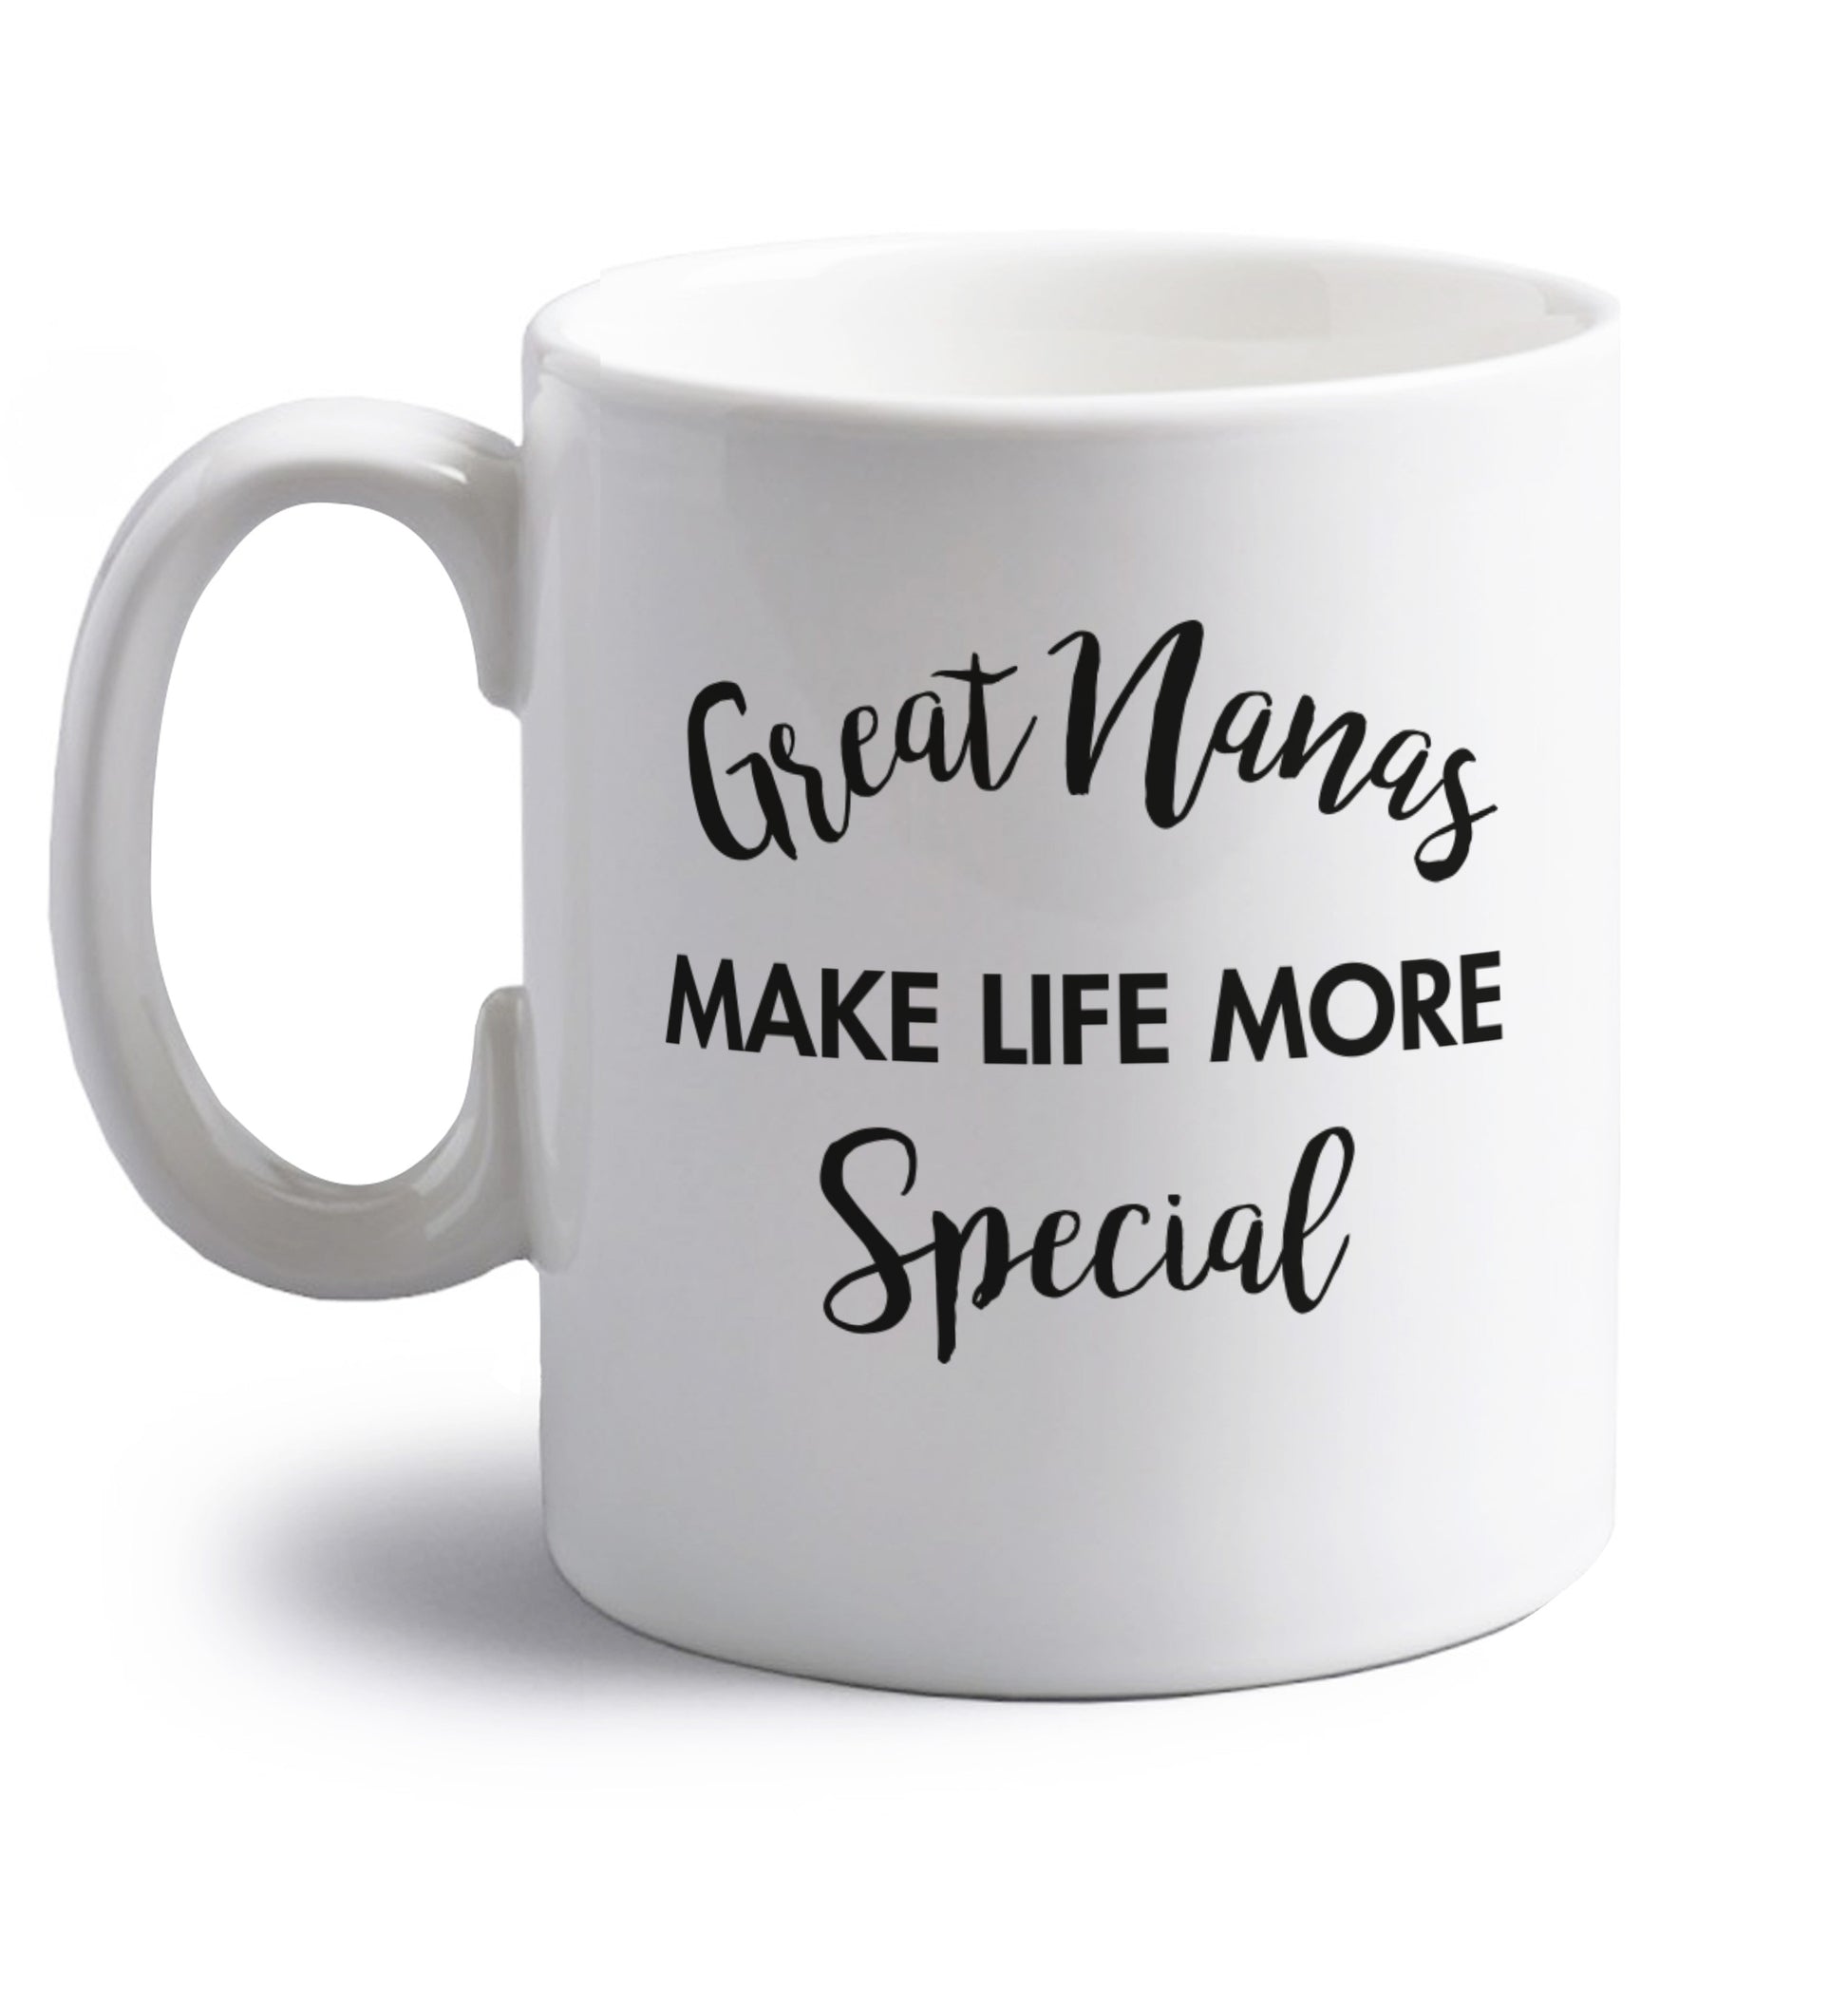 Great nanas make life more special right handed white ceramic mug 